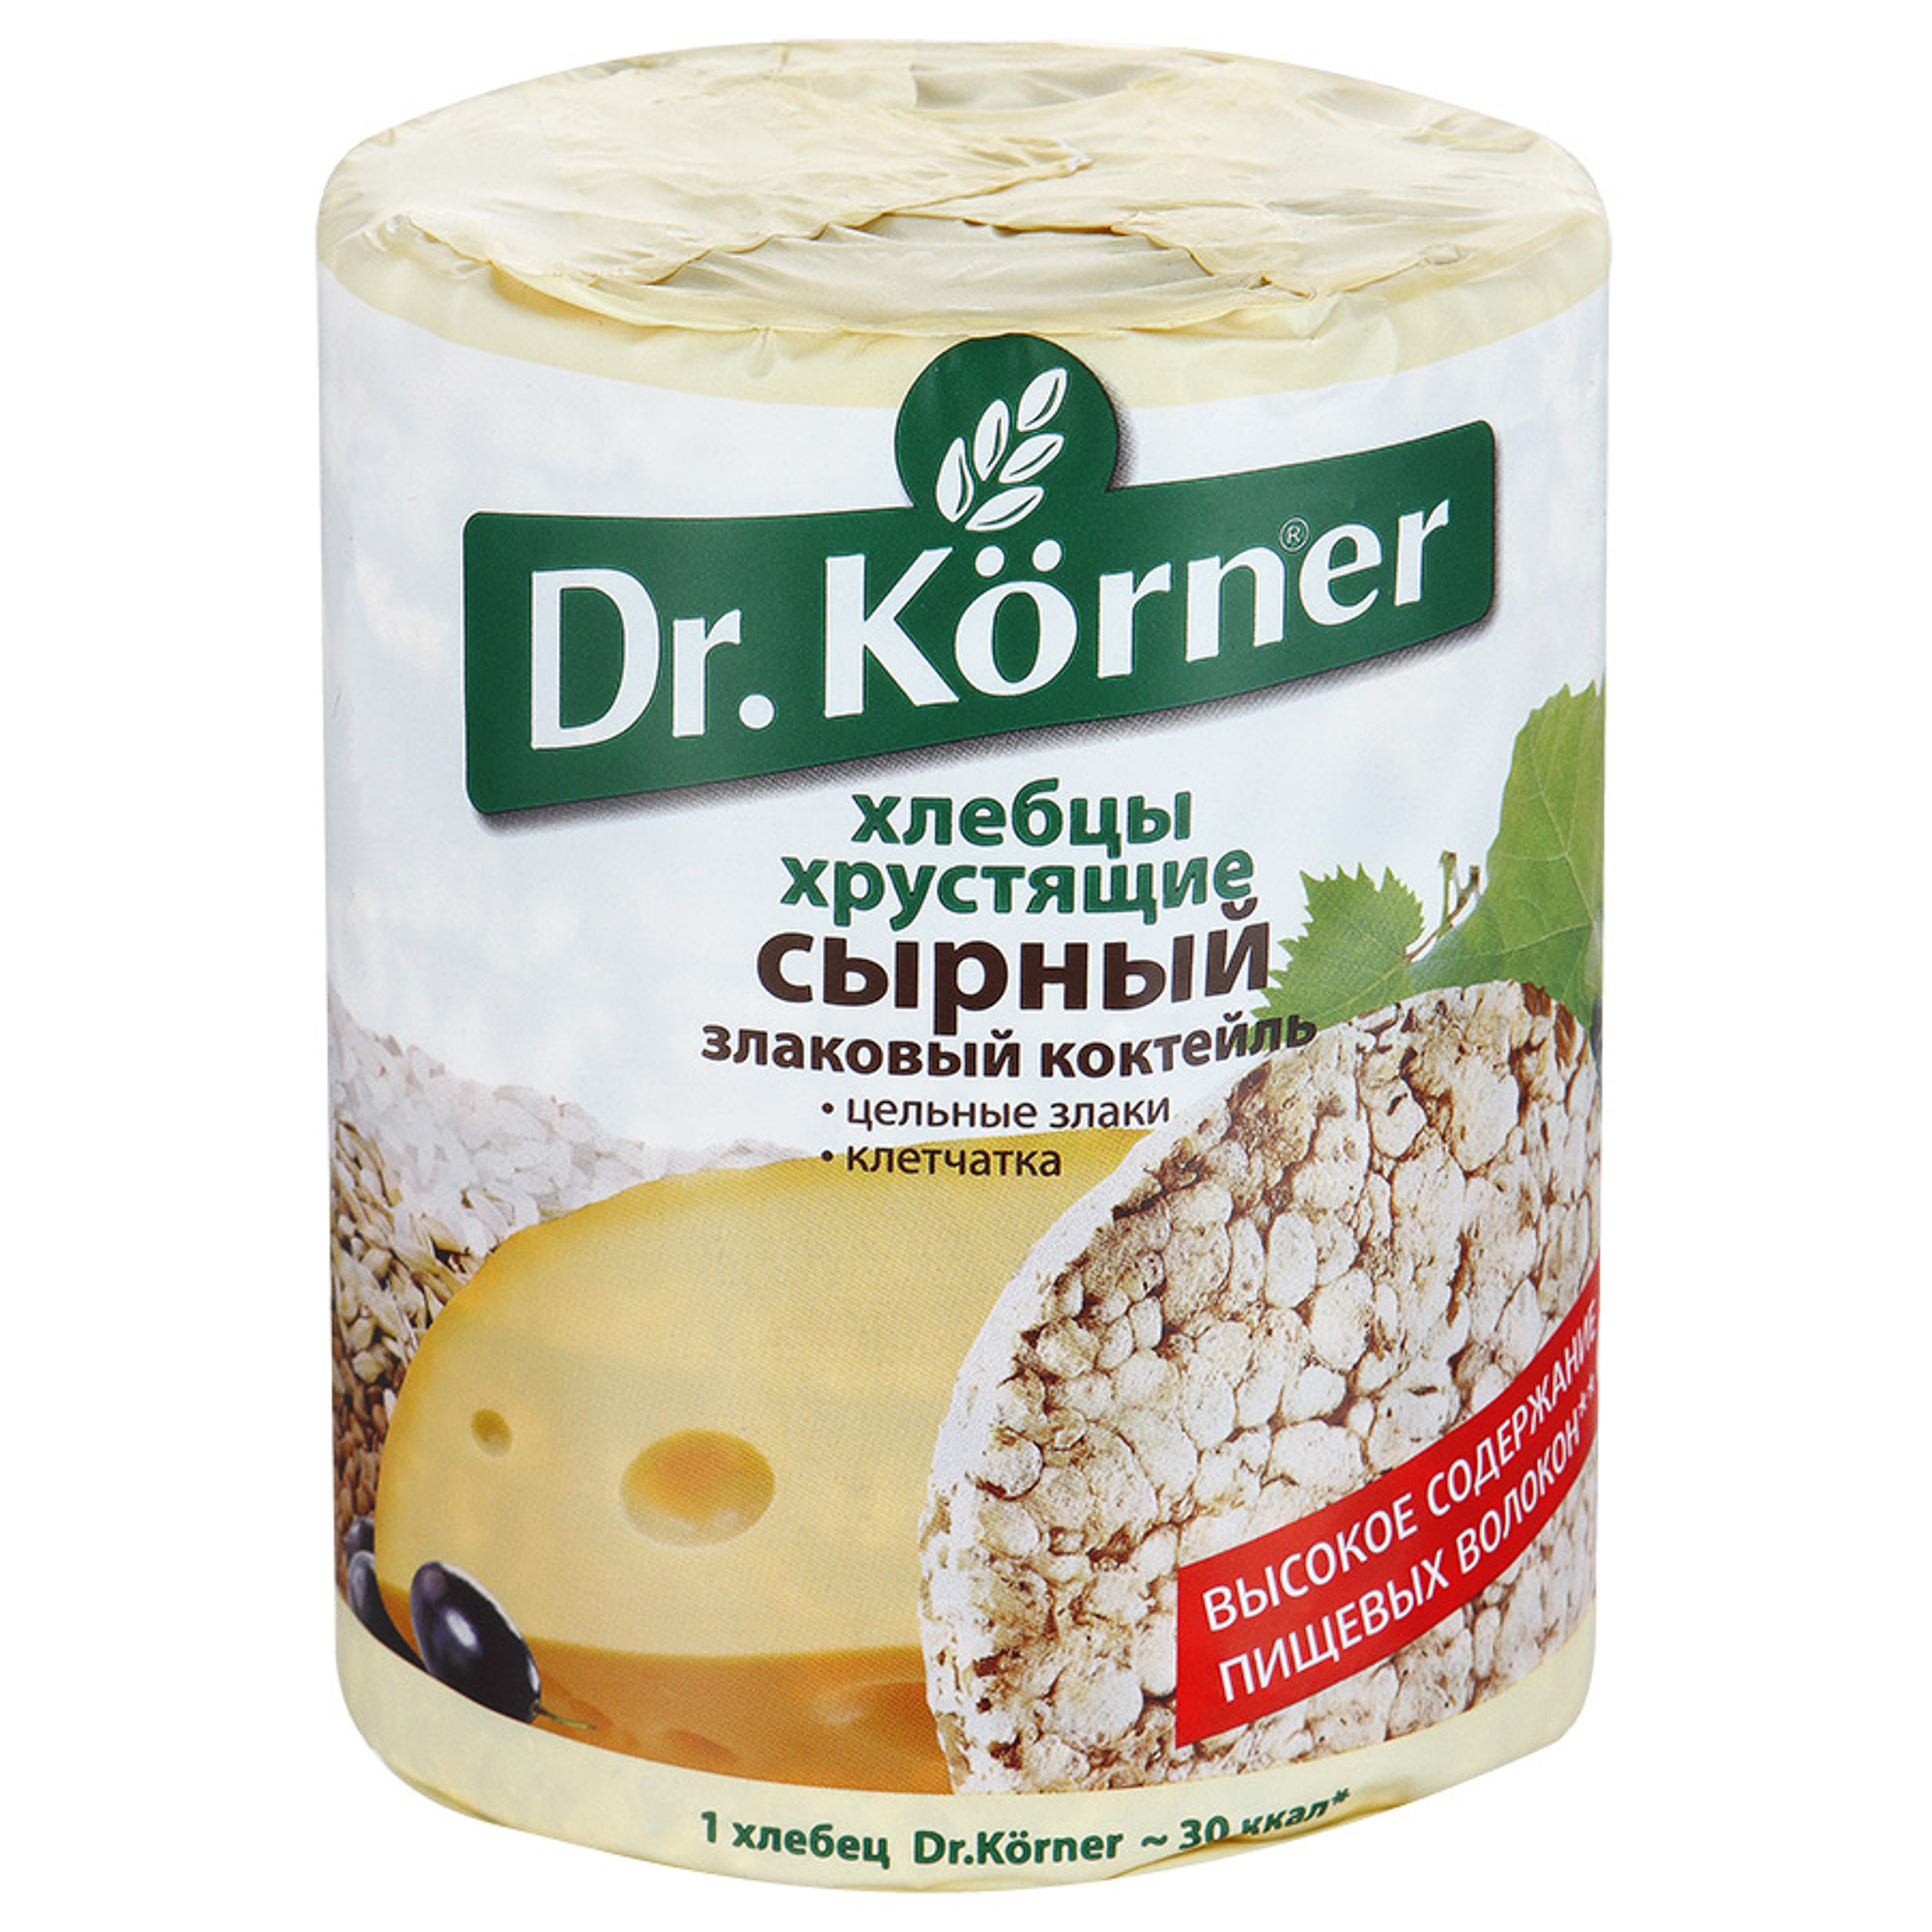 Хлебцы хрустящие Dr. Korner Злаковый коктейль сырный 100 г